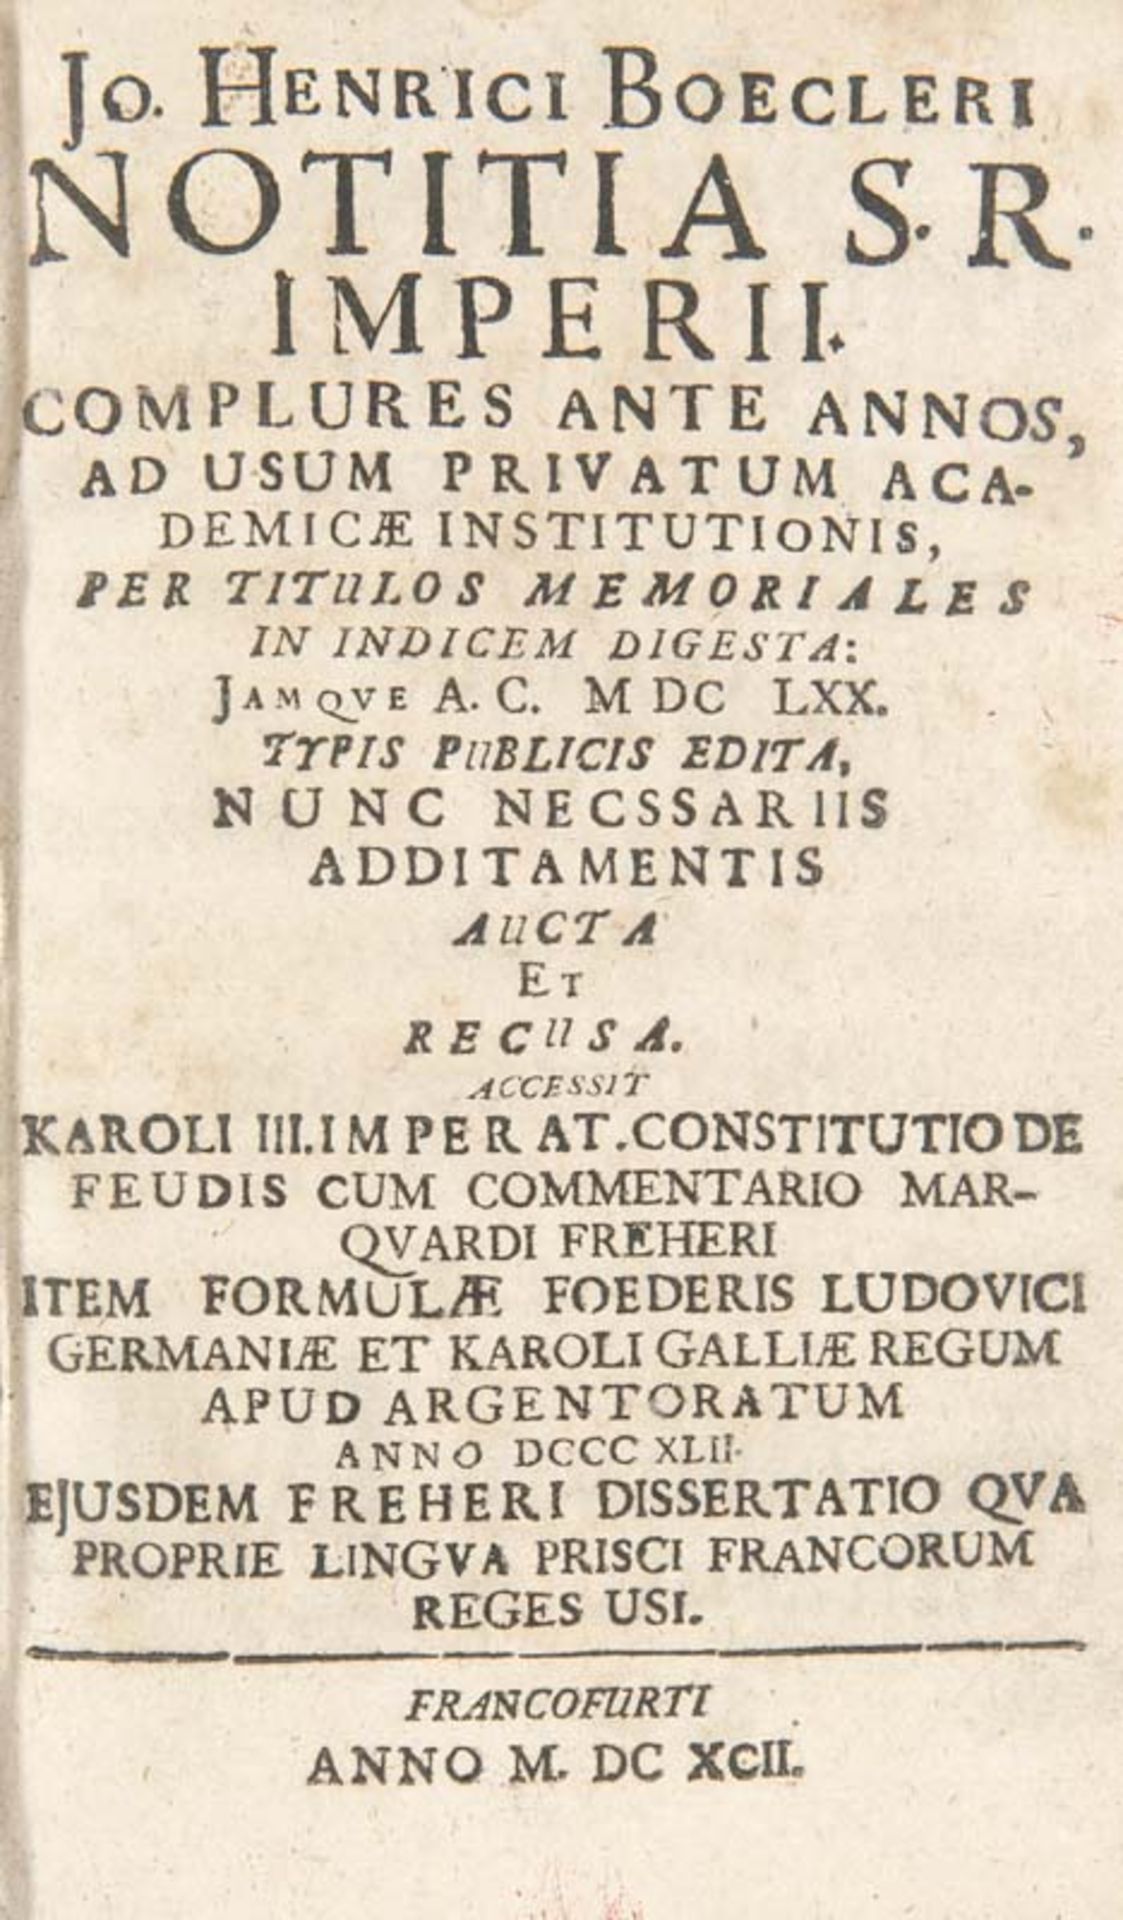 Boeckler, Johann Heinrich. Notitia S.R. Imperii: Complures Ante Annos, Ad Usum Privatum Academicae